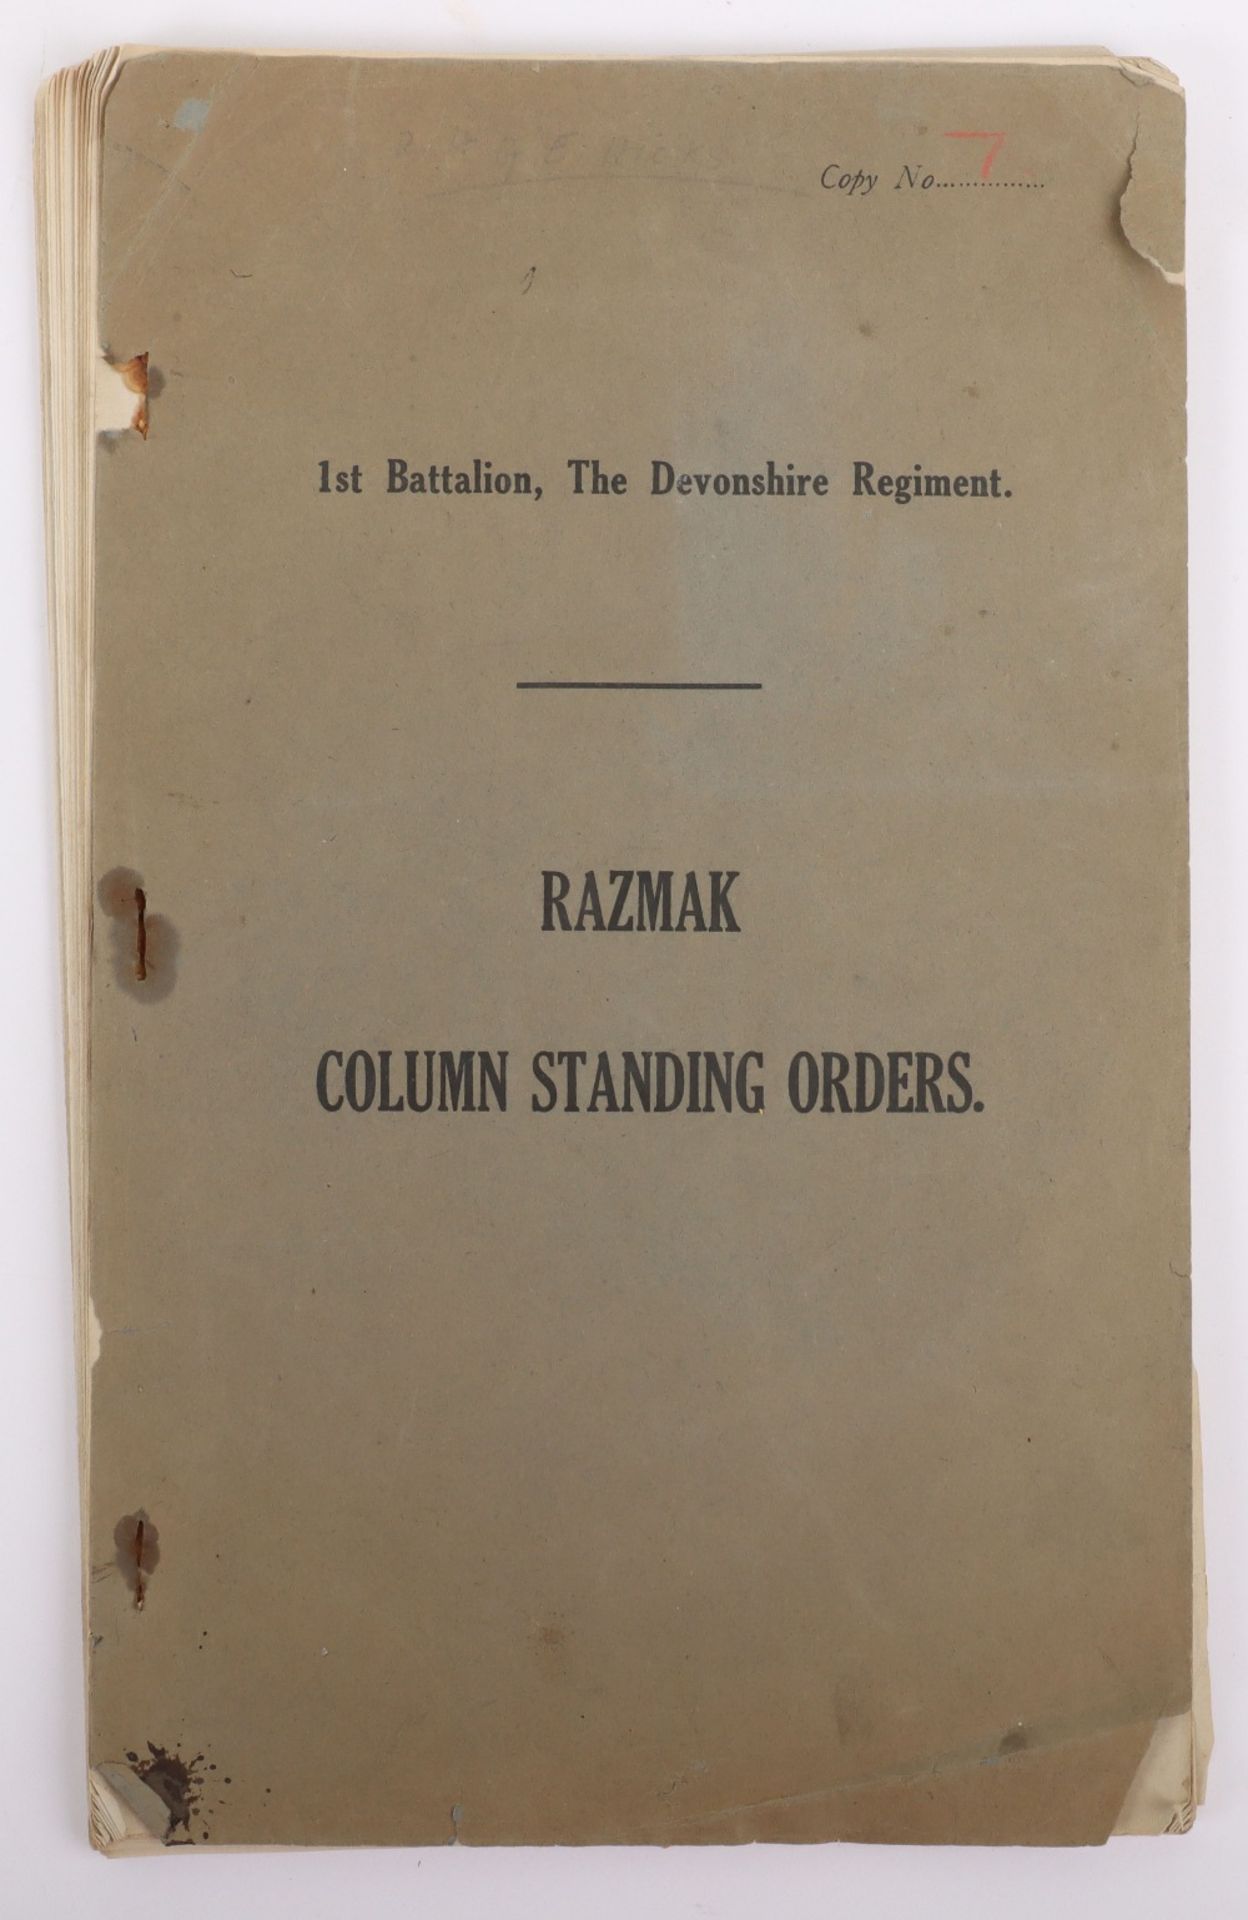 Razmak Column Standing Orders 1st Battalion The Devonshire Regiment c.1934 - Image 2 of 6